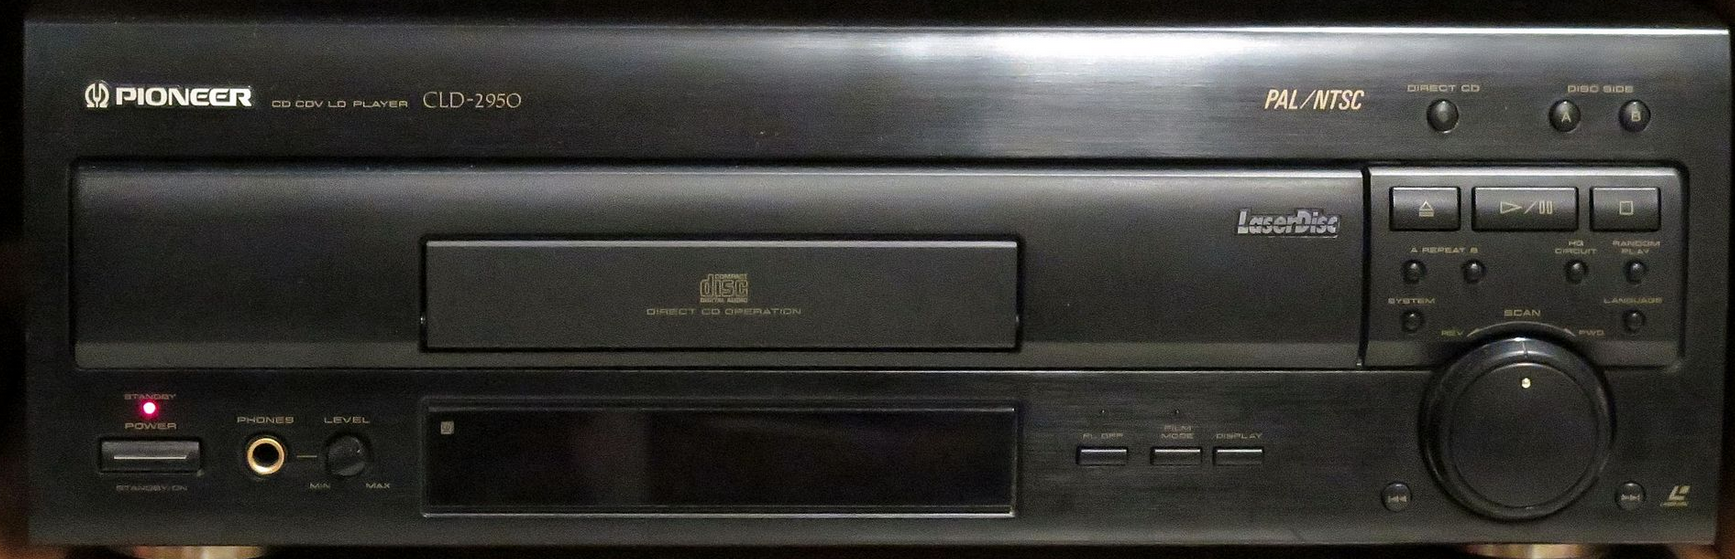 Pioneer Laser Disc Player